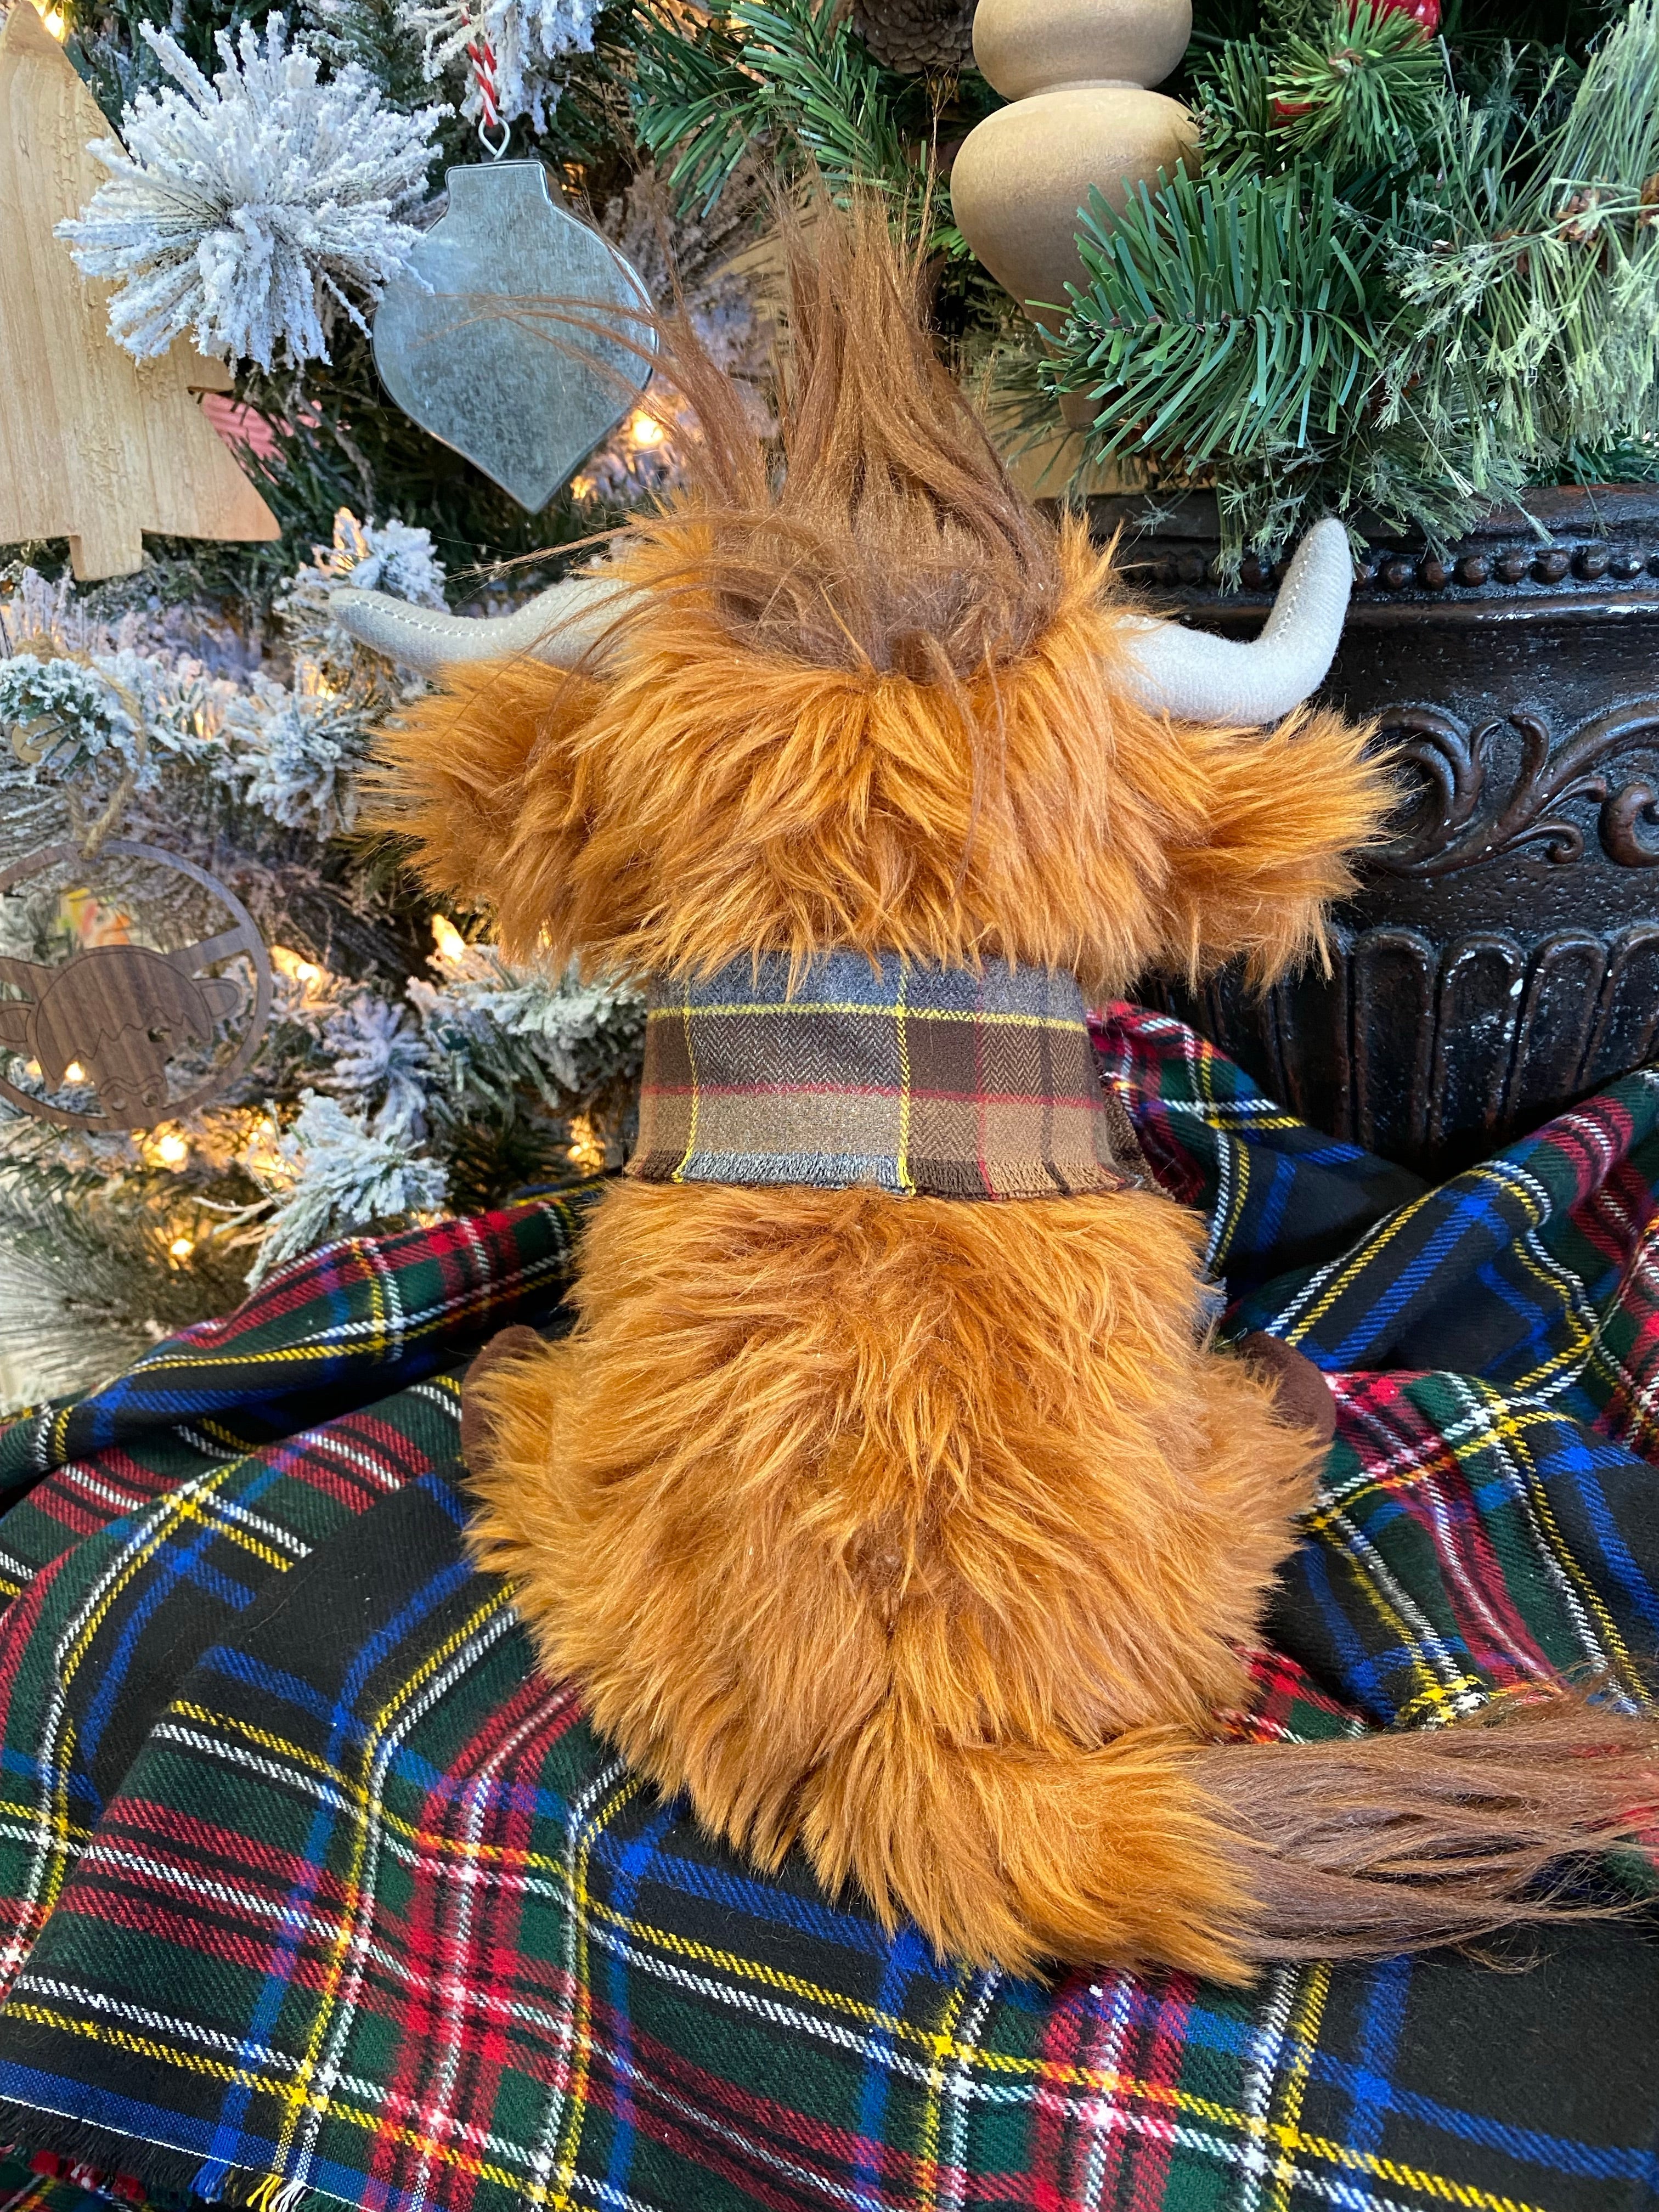 Angus the Heilan Coo - Highland Cow Stuffed Animal Plushie